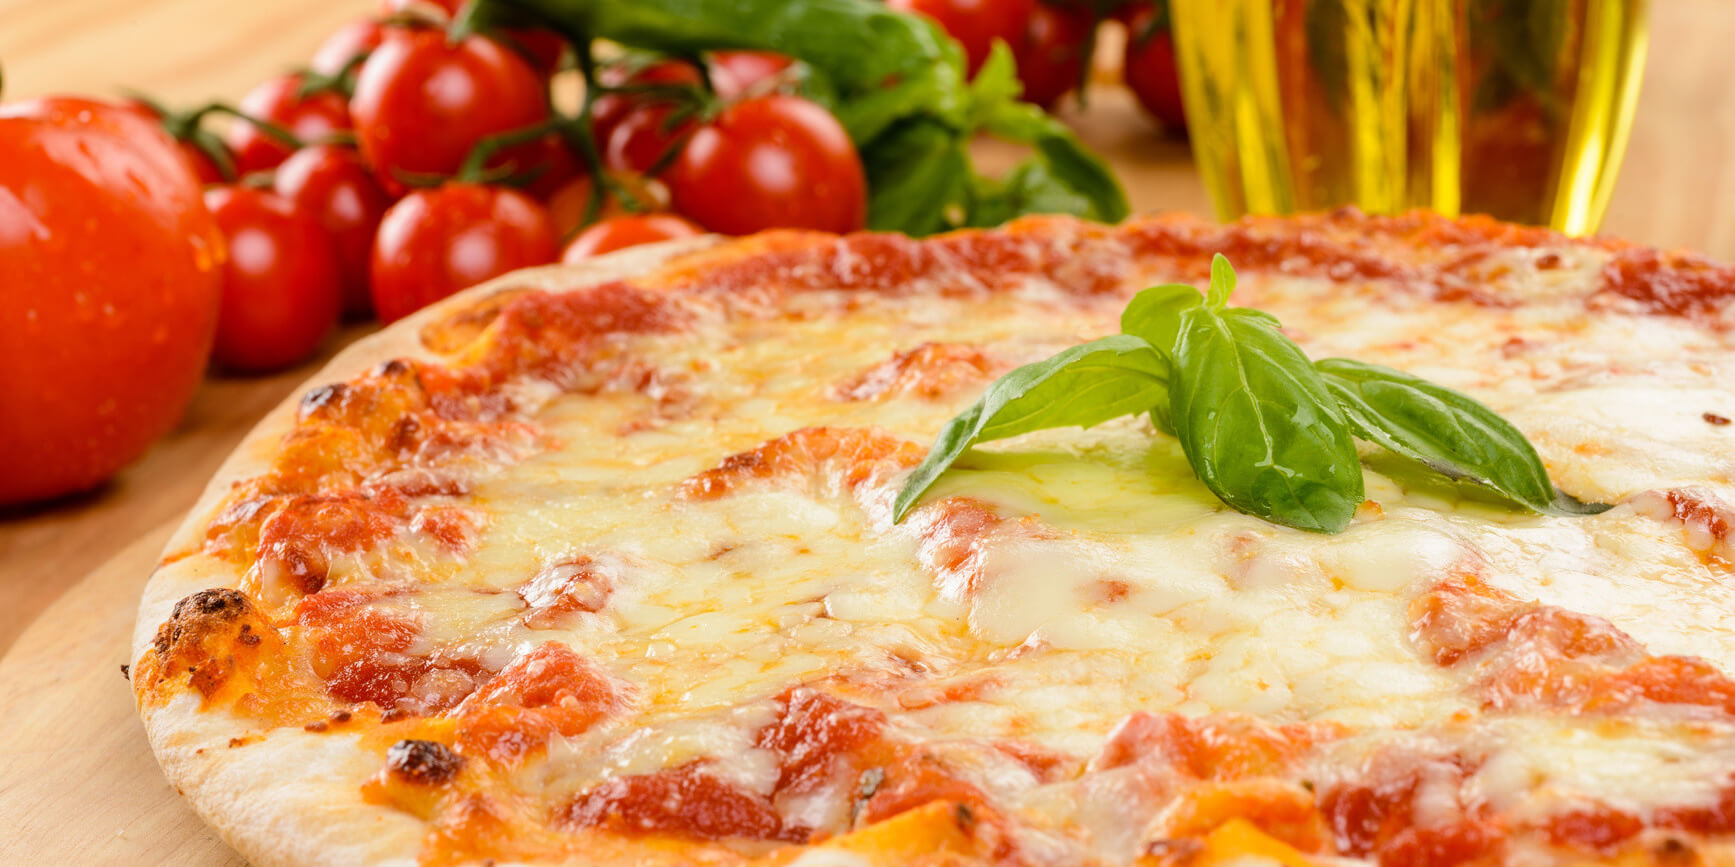 Masa de pizza italiana con solo 2 ingredientes